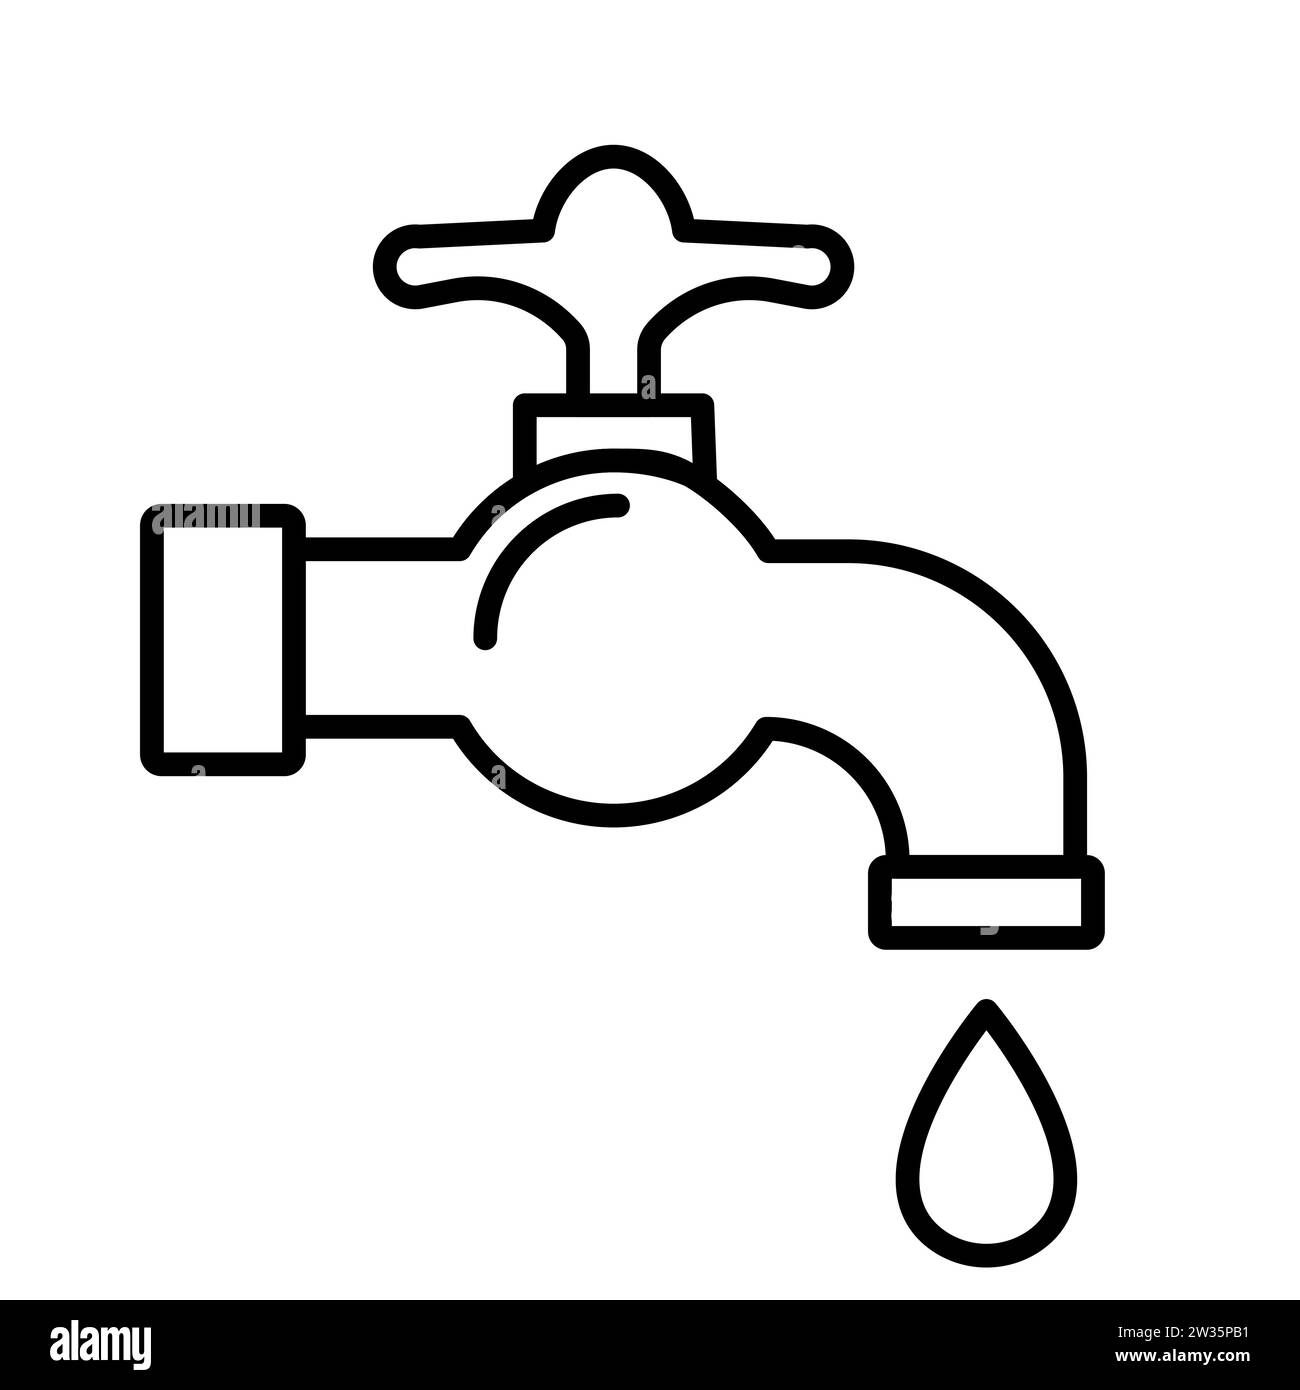 Faucet illustration. Water, plumber, plumbing, valve, drop bath sink shower pipe leak Vector icons Stock Vector